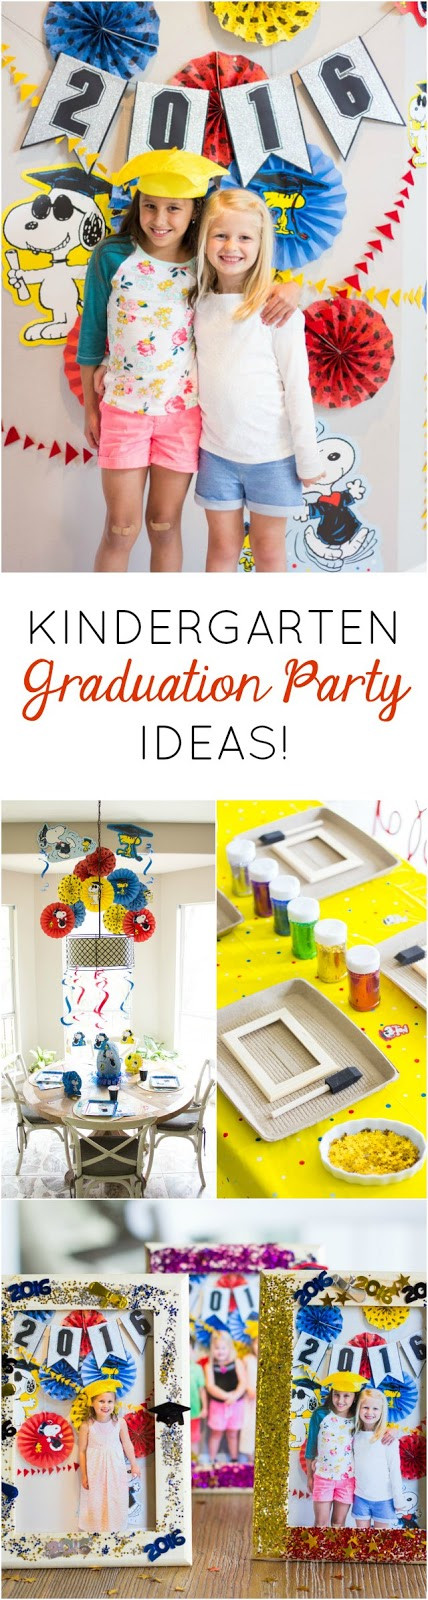 Kindergarten Graduation Party Ideas
 Host a Kindergarten Graduation Playdate